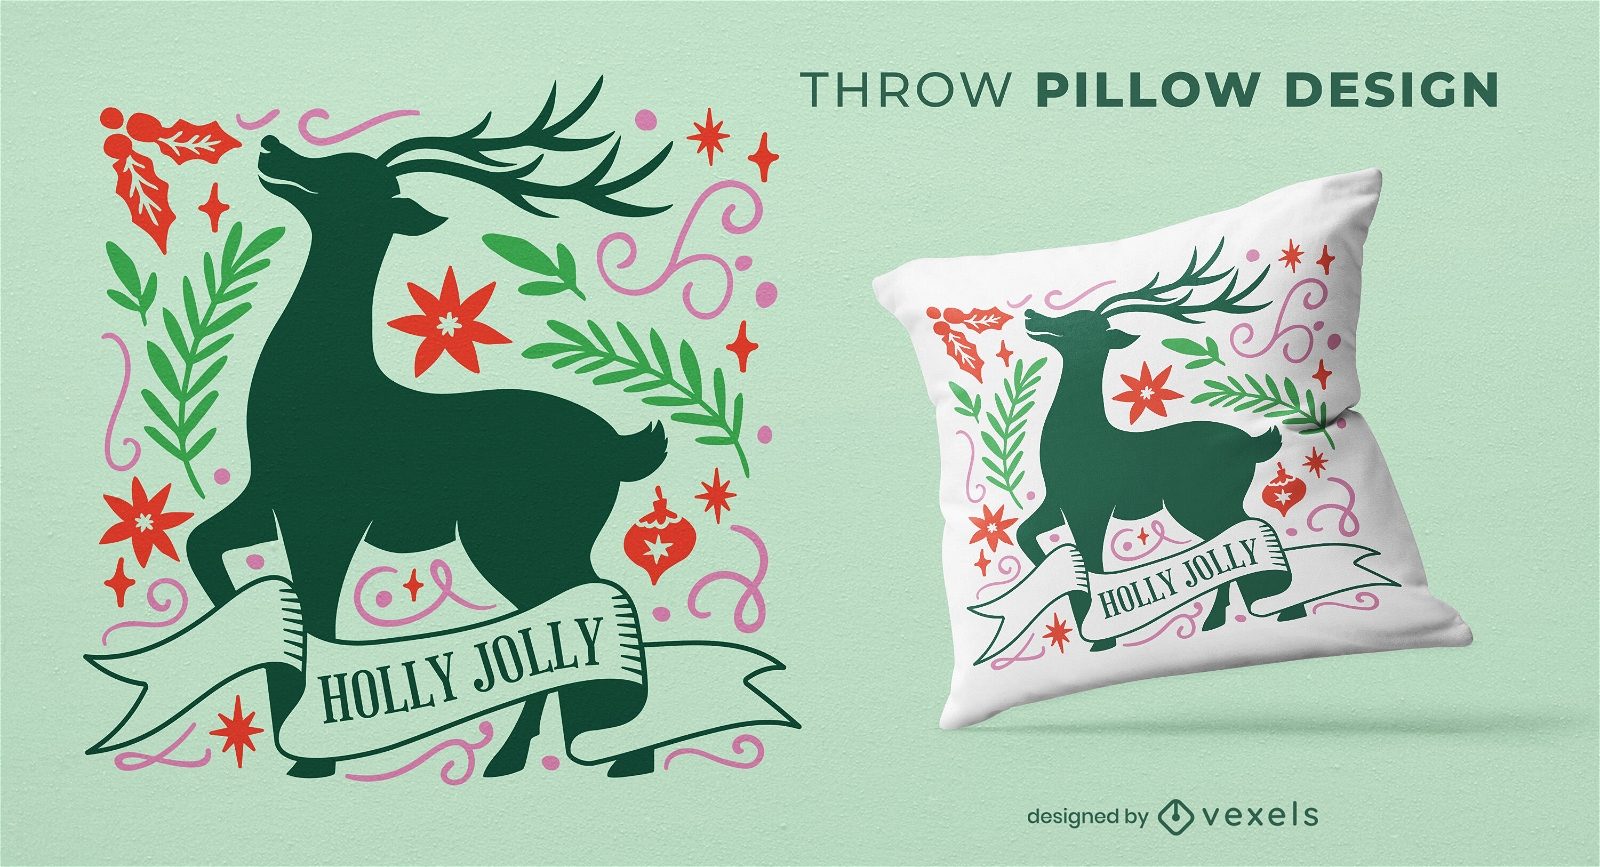 Holly jolly Christmas throw pillow design